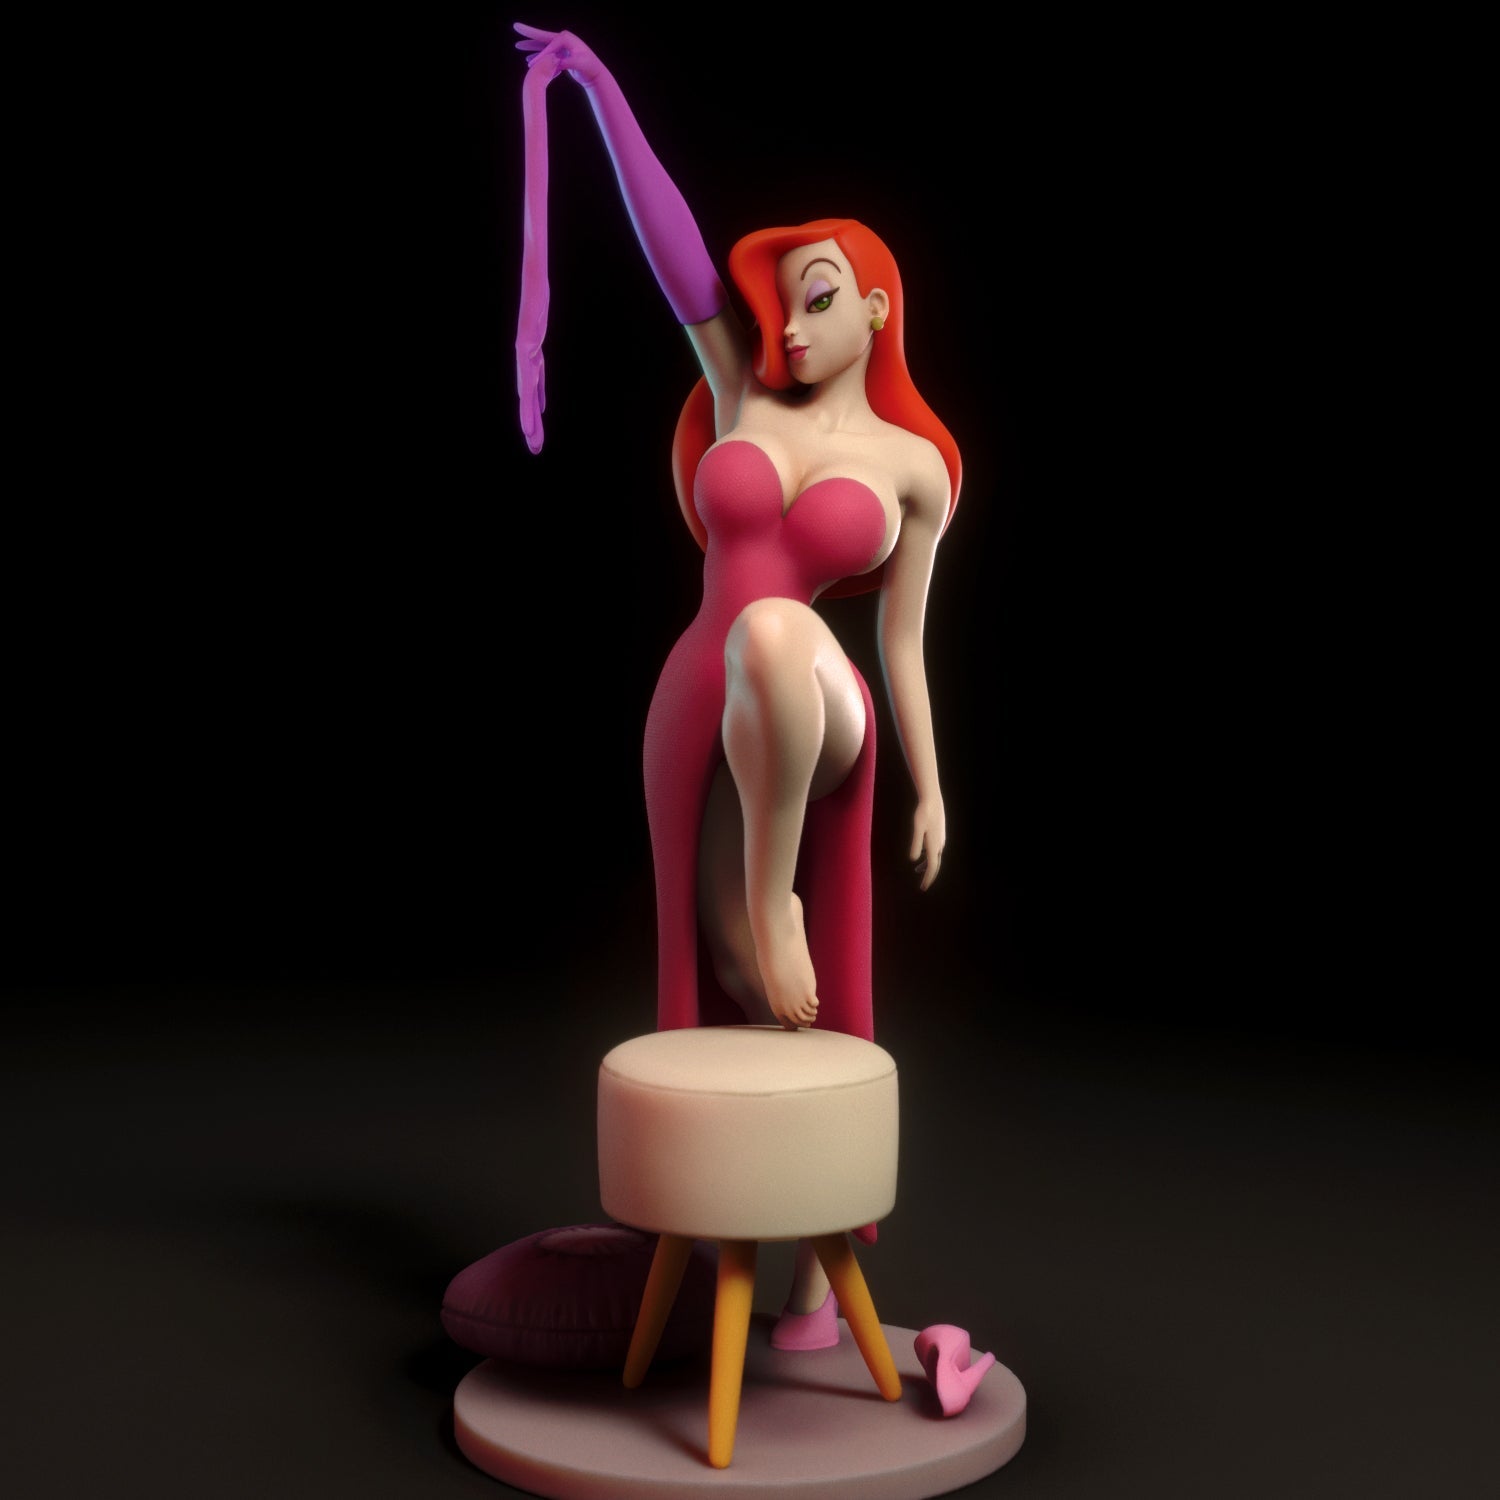 Jessica Rabbit Pin-Up 3D Printed figure Fanart by Torrida Minis